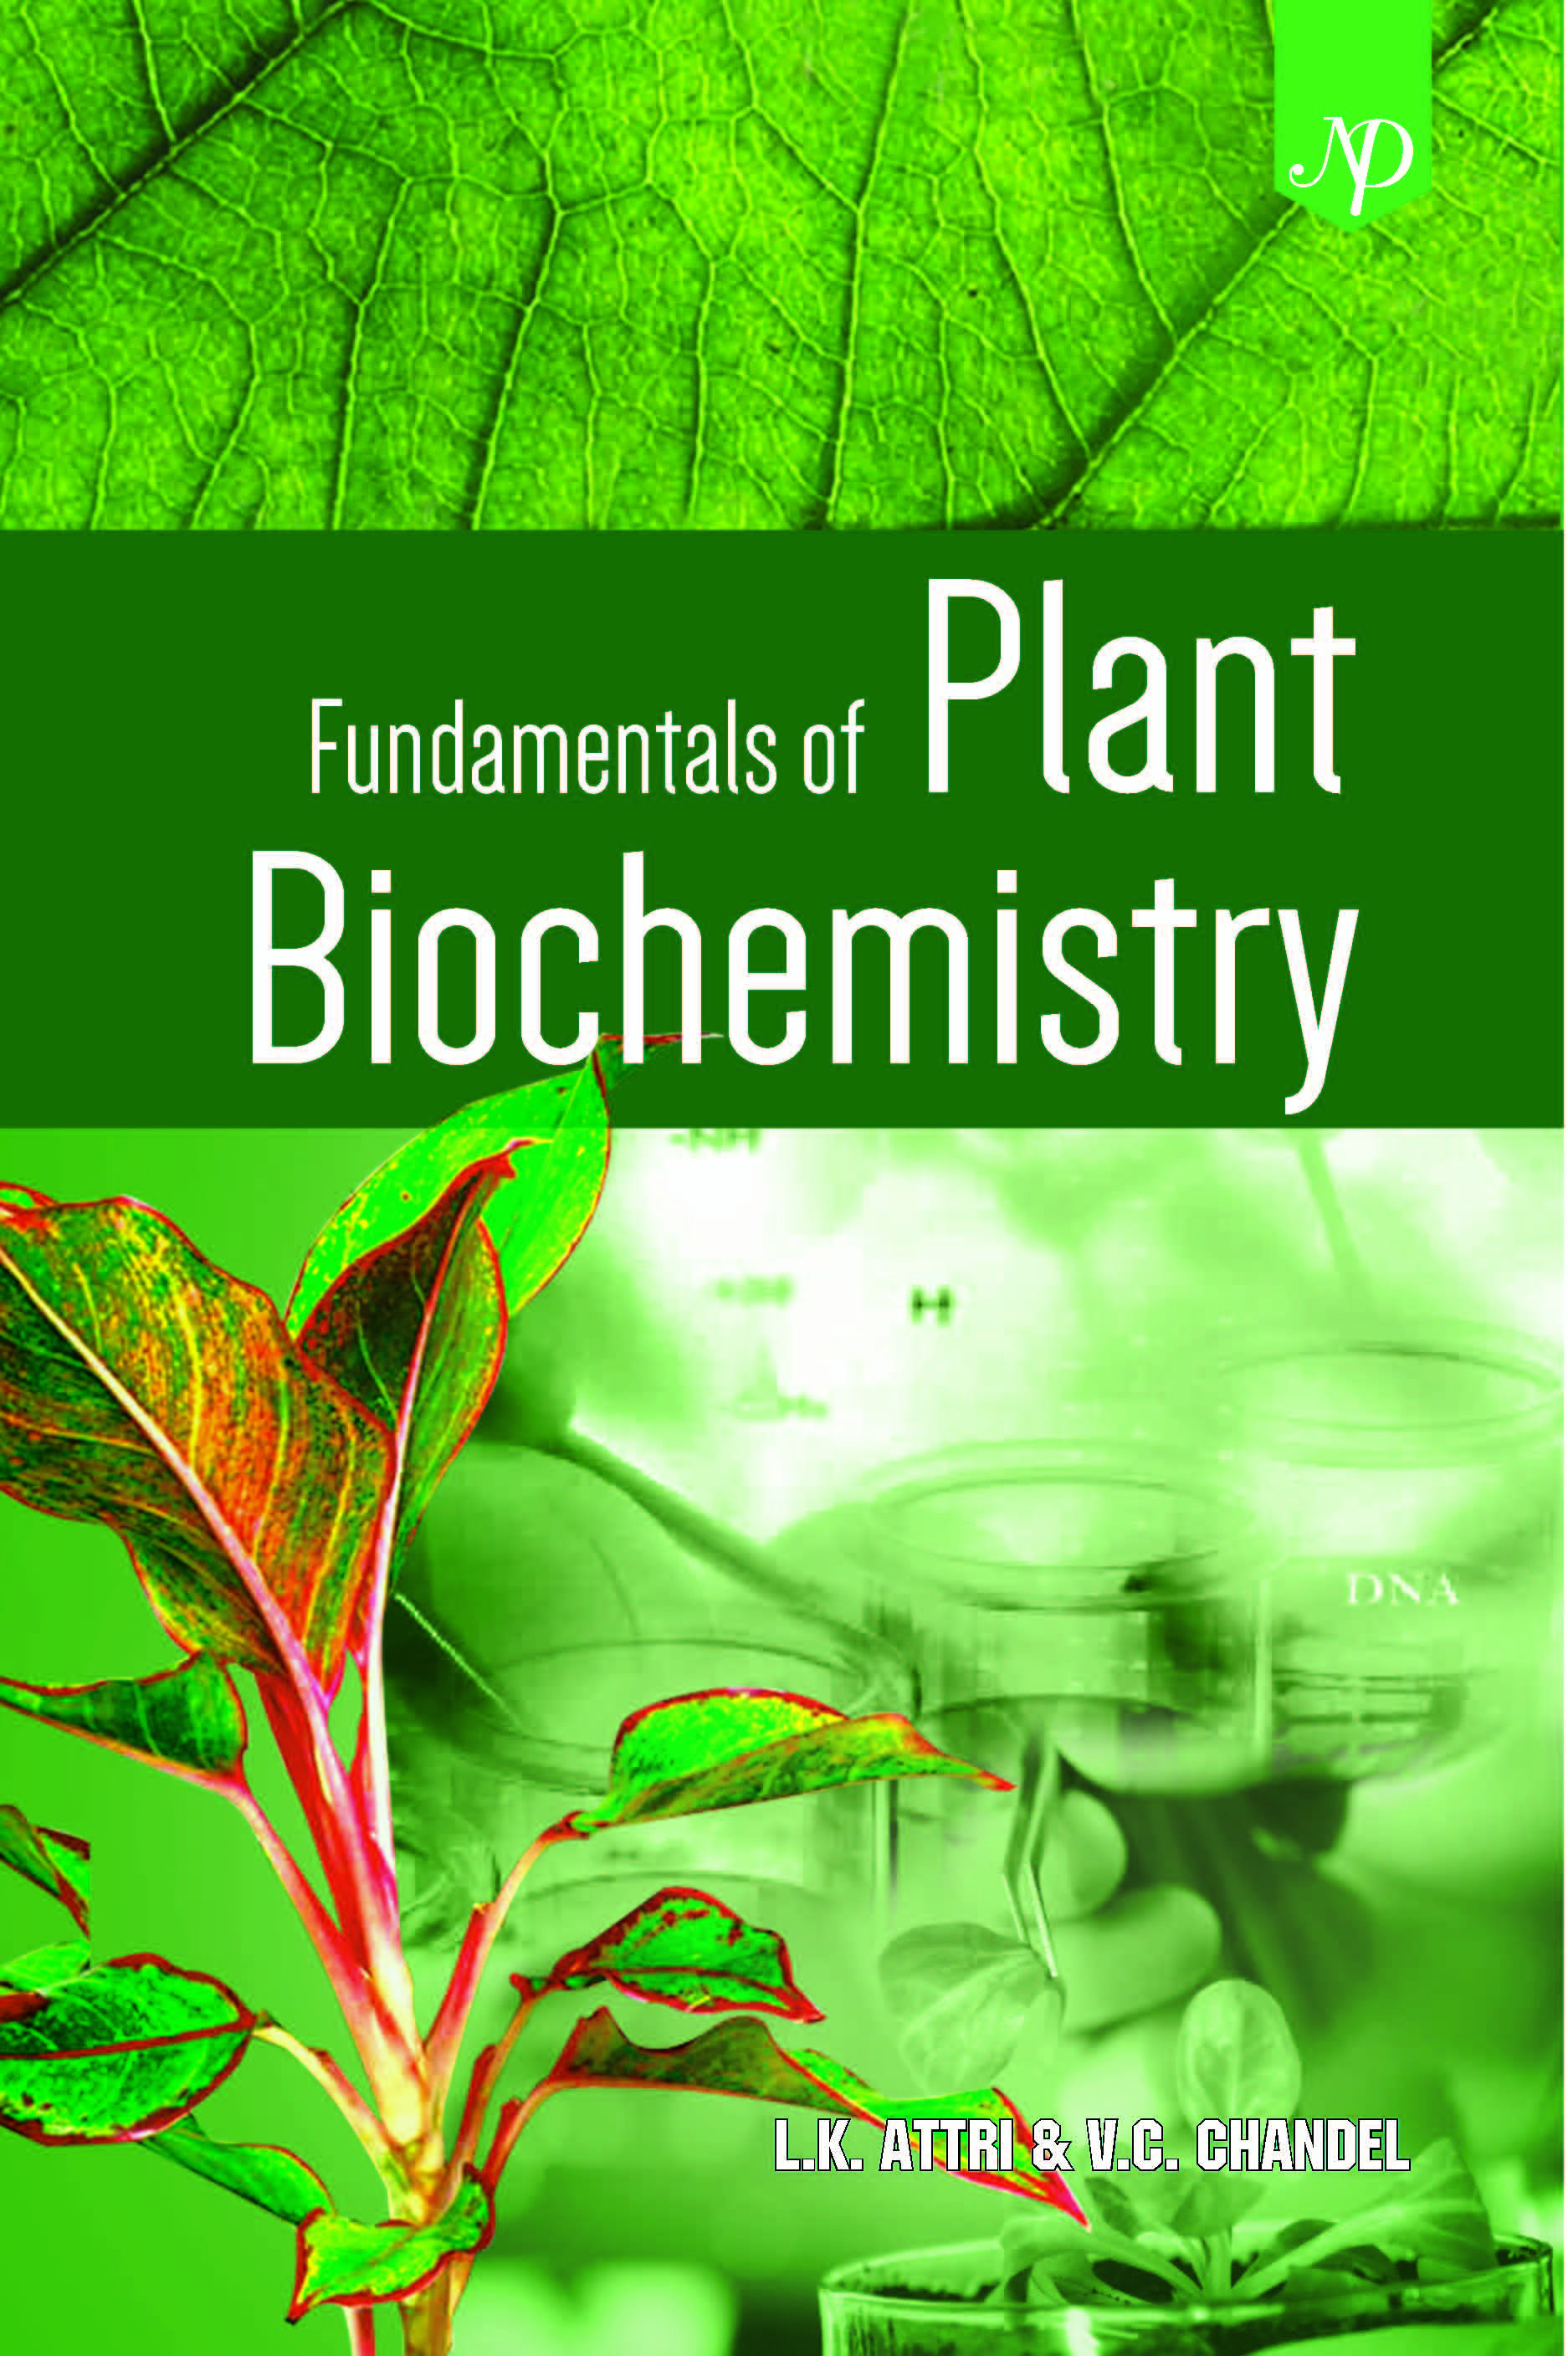 Fundamentals of Plant Biochemistry